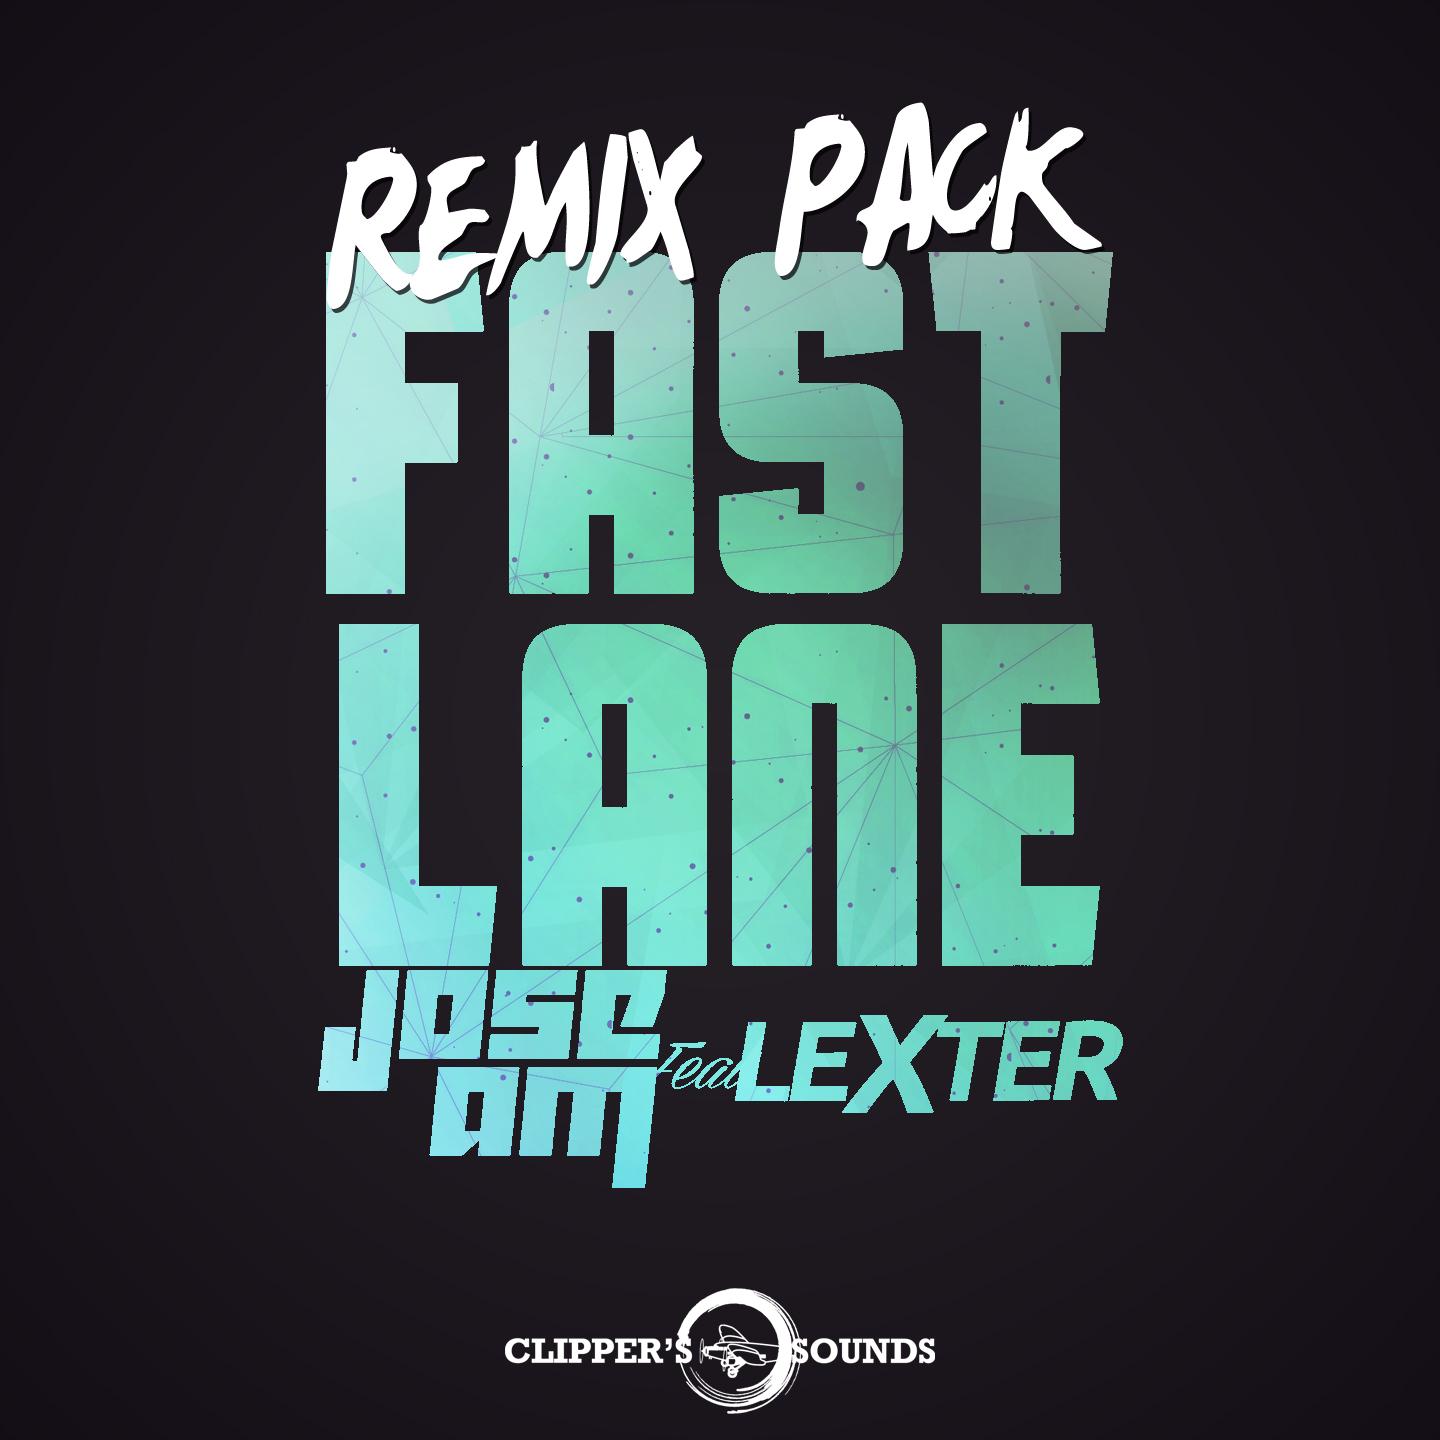 Fast Lane (Remix Pack)